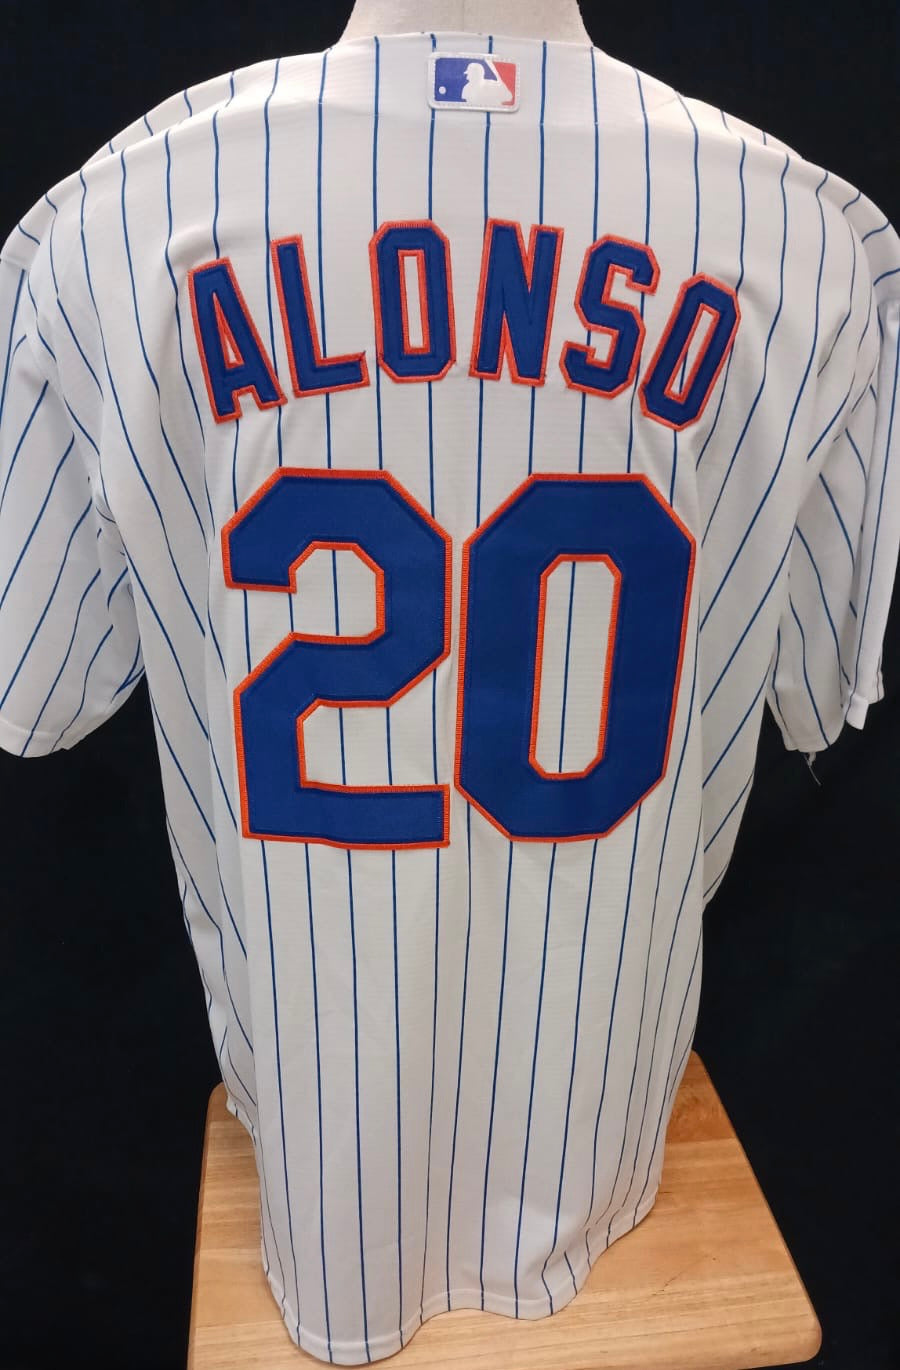 Pete Alonso Jersey, Replica & Authenitc Pete Alonso Mets Jerseys